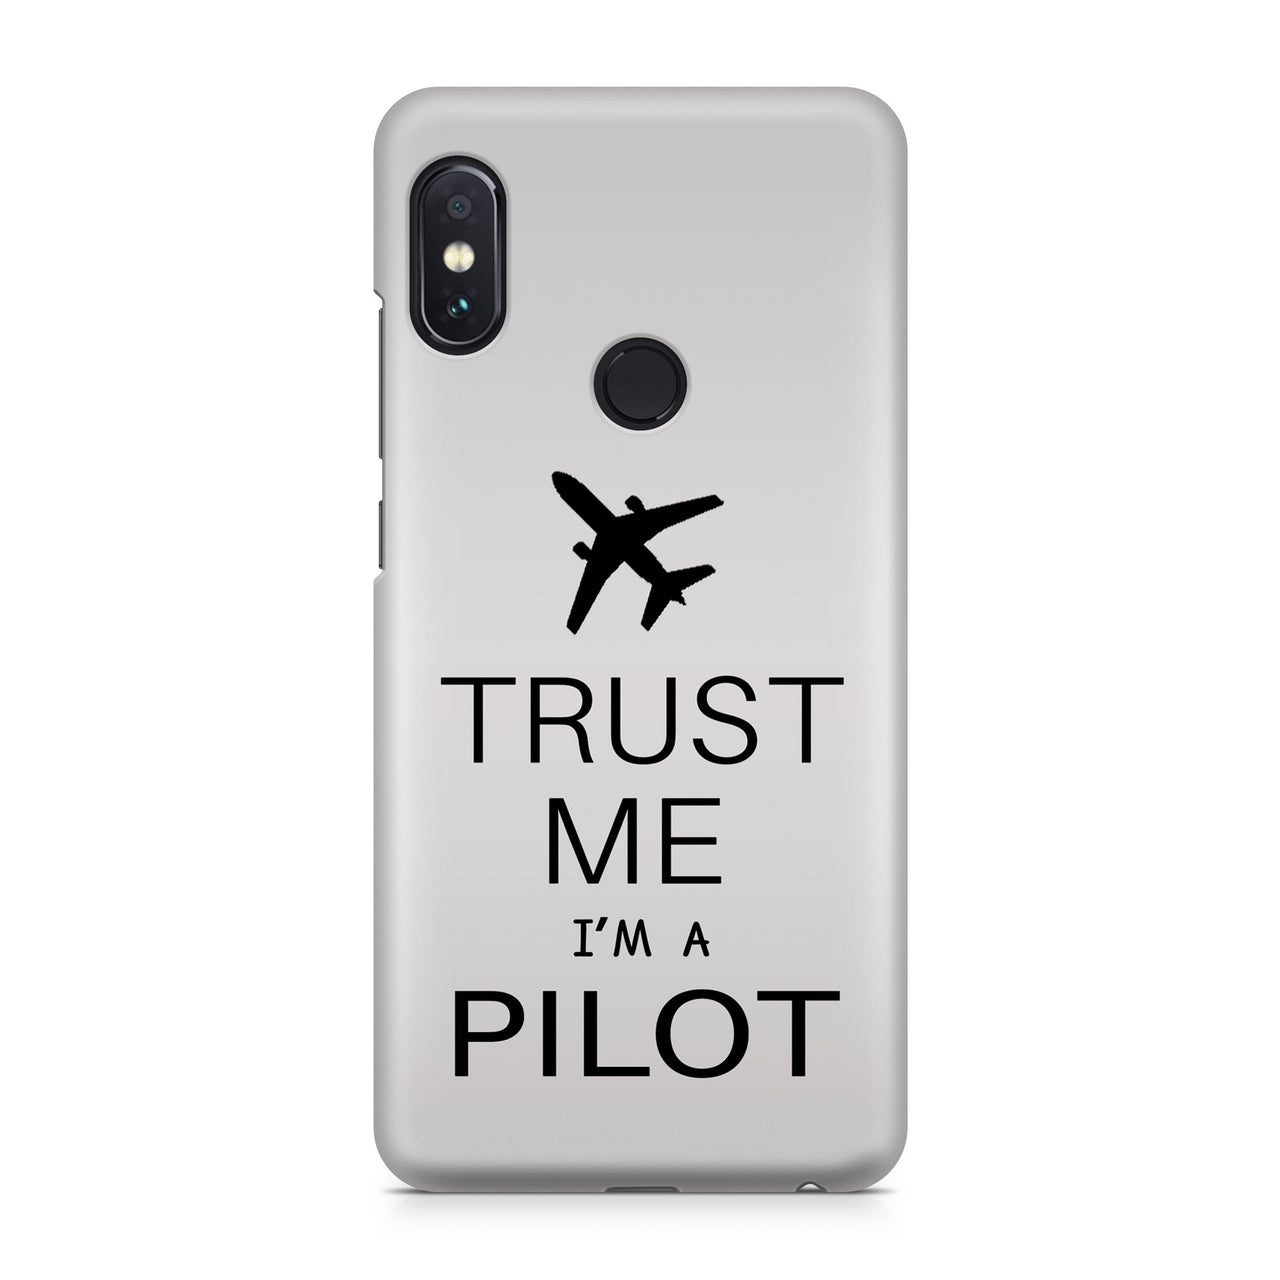 Trust Me I’m a Pilot 2 Designed Xiaomi Cases